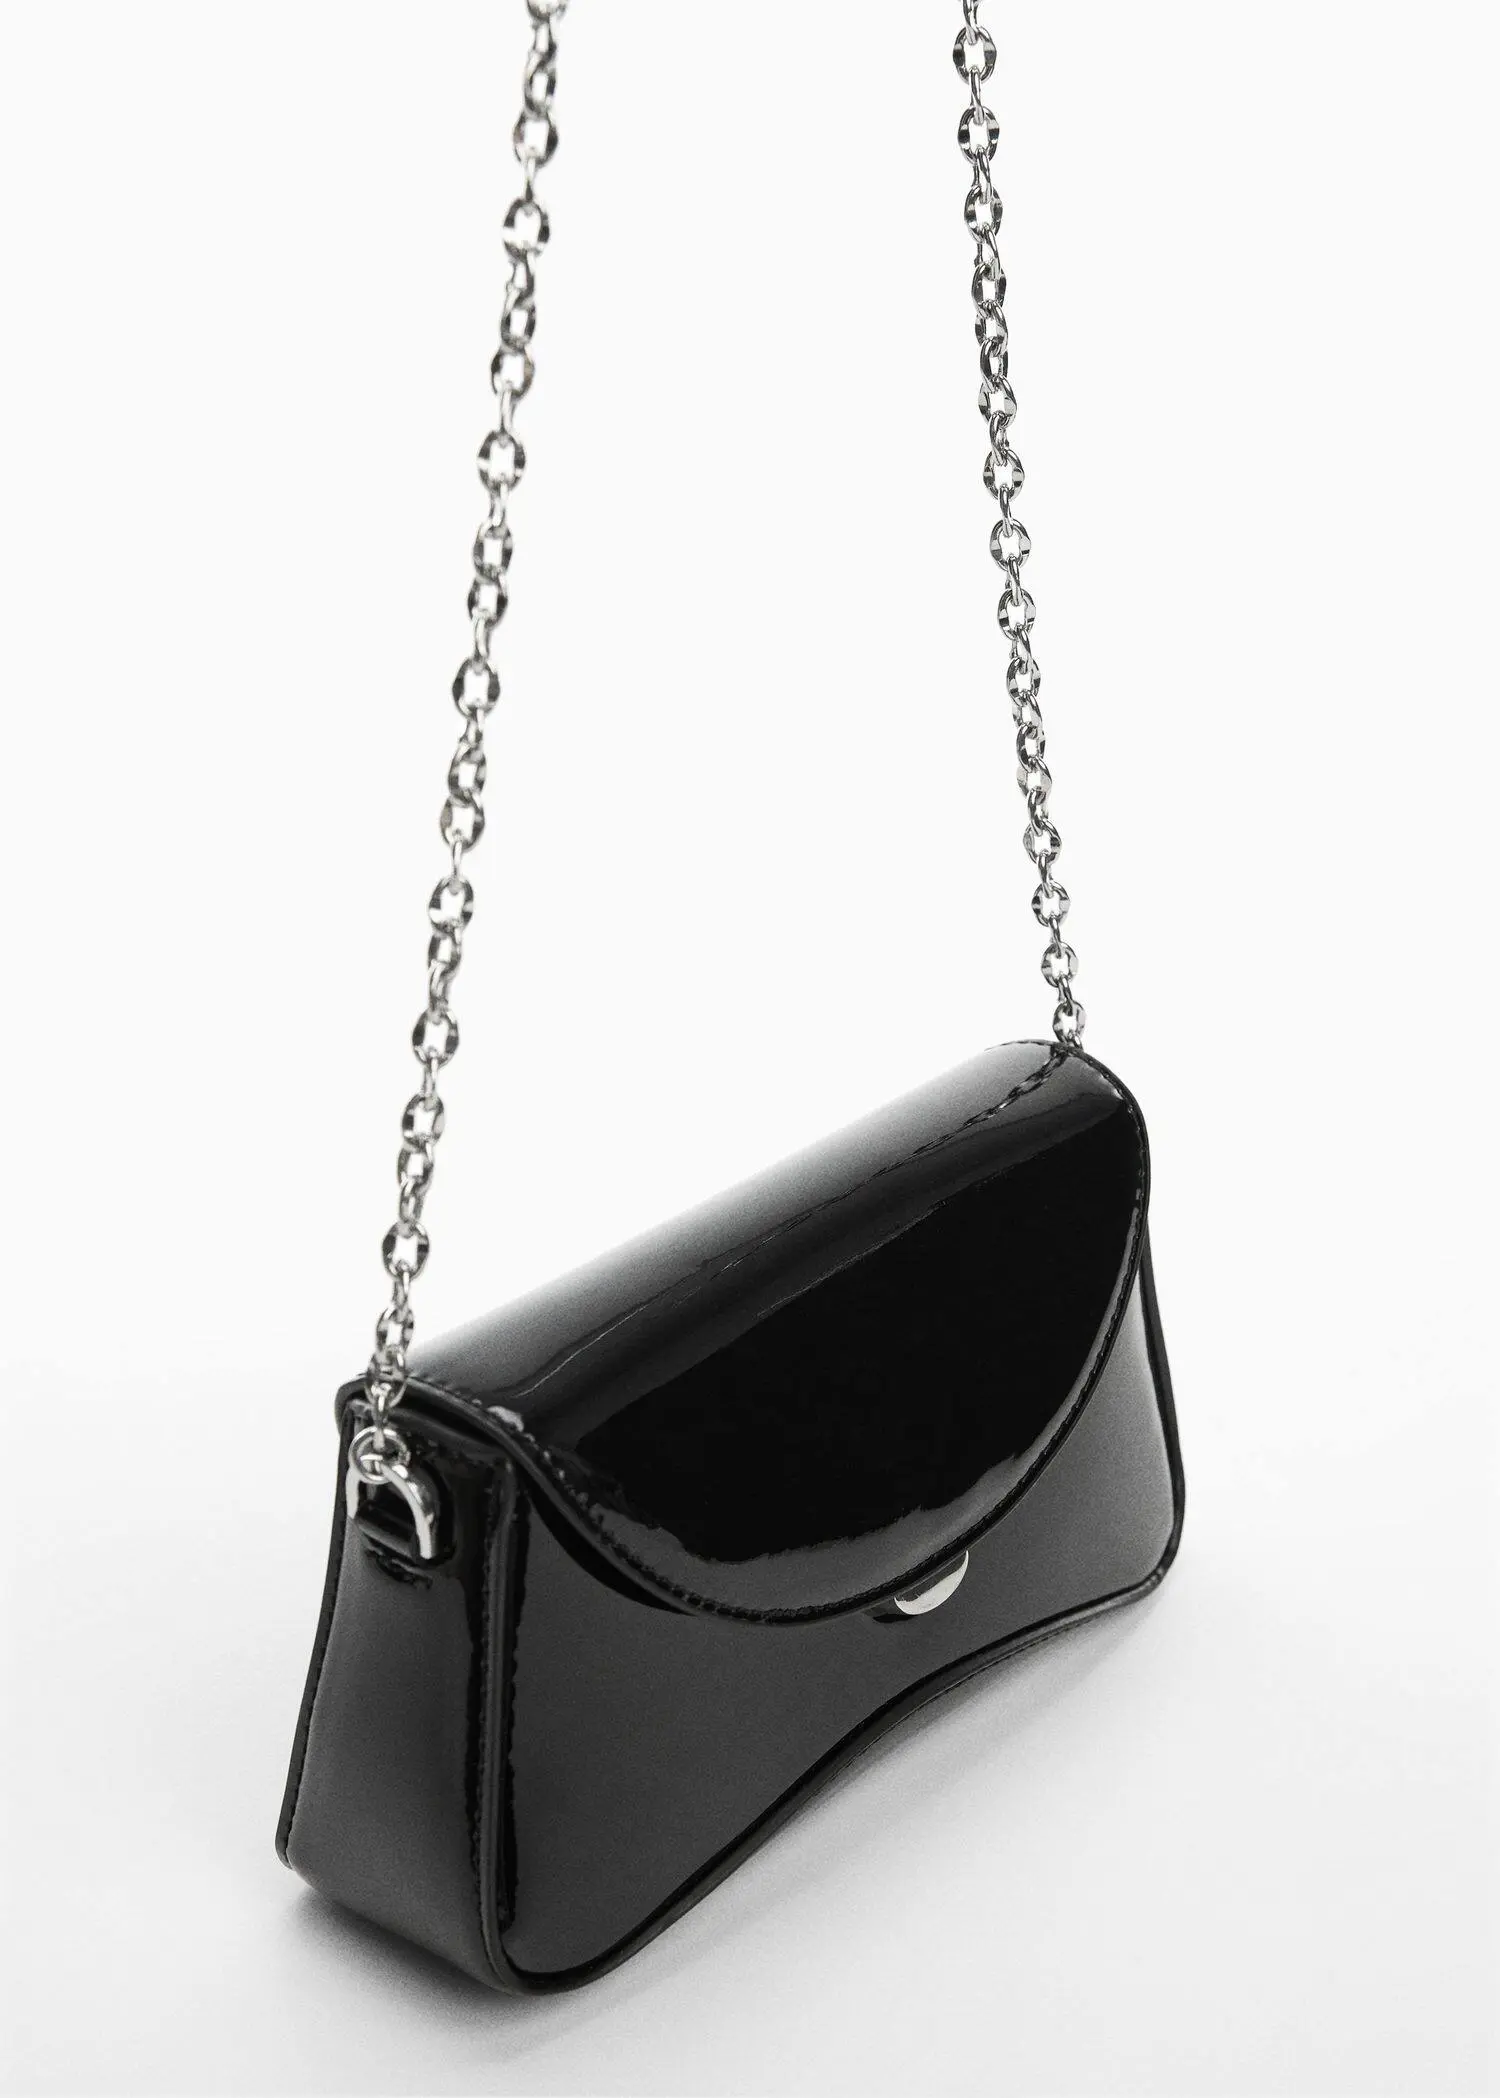 Mango Patent leather chain handbag. 2